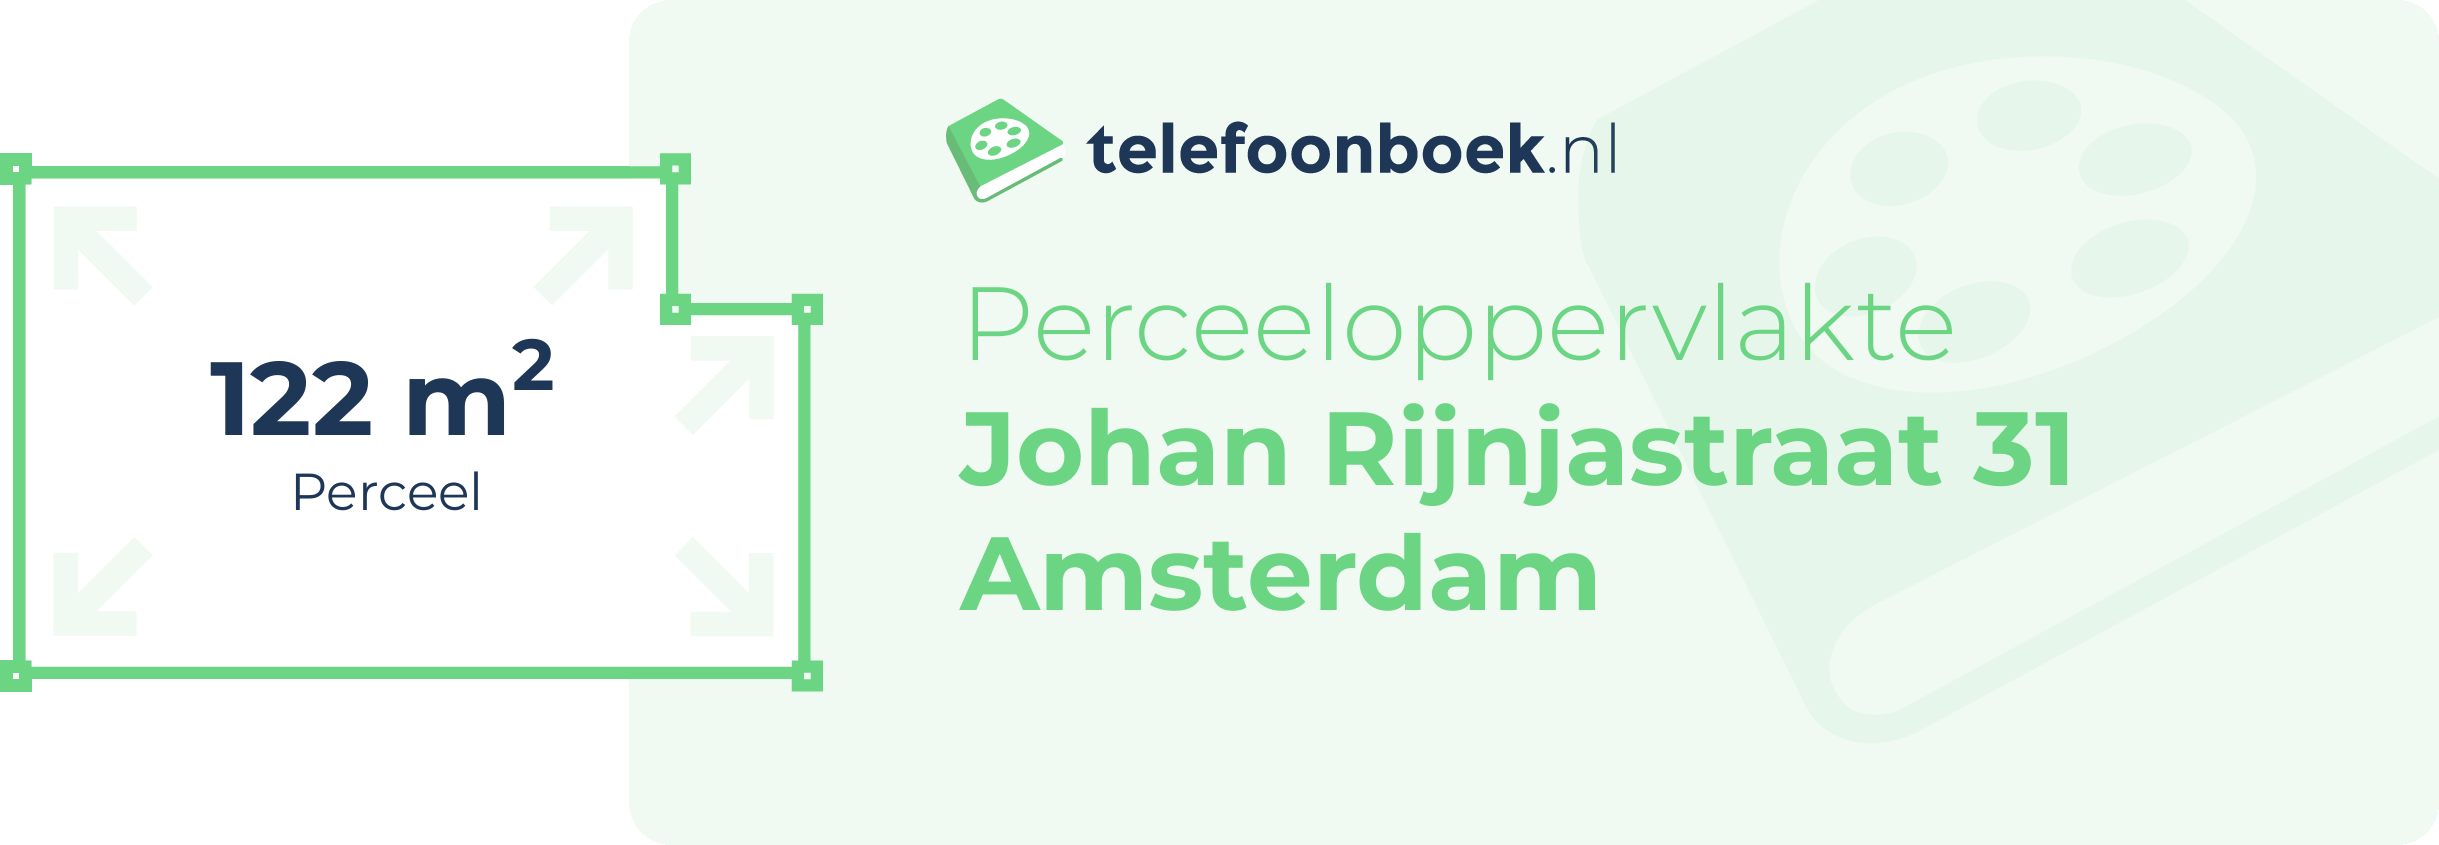 Perceeloppervlakte Johan Rijnjastraat 31 Amsterdam